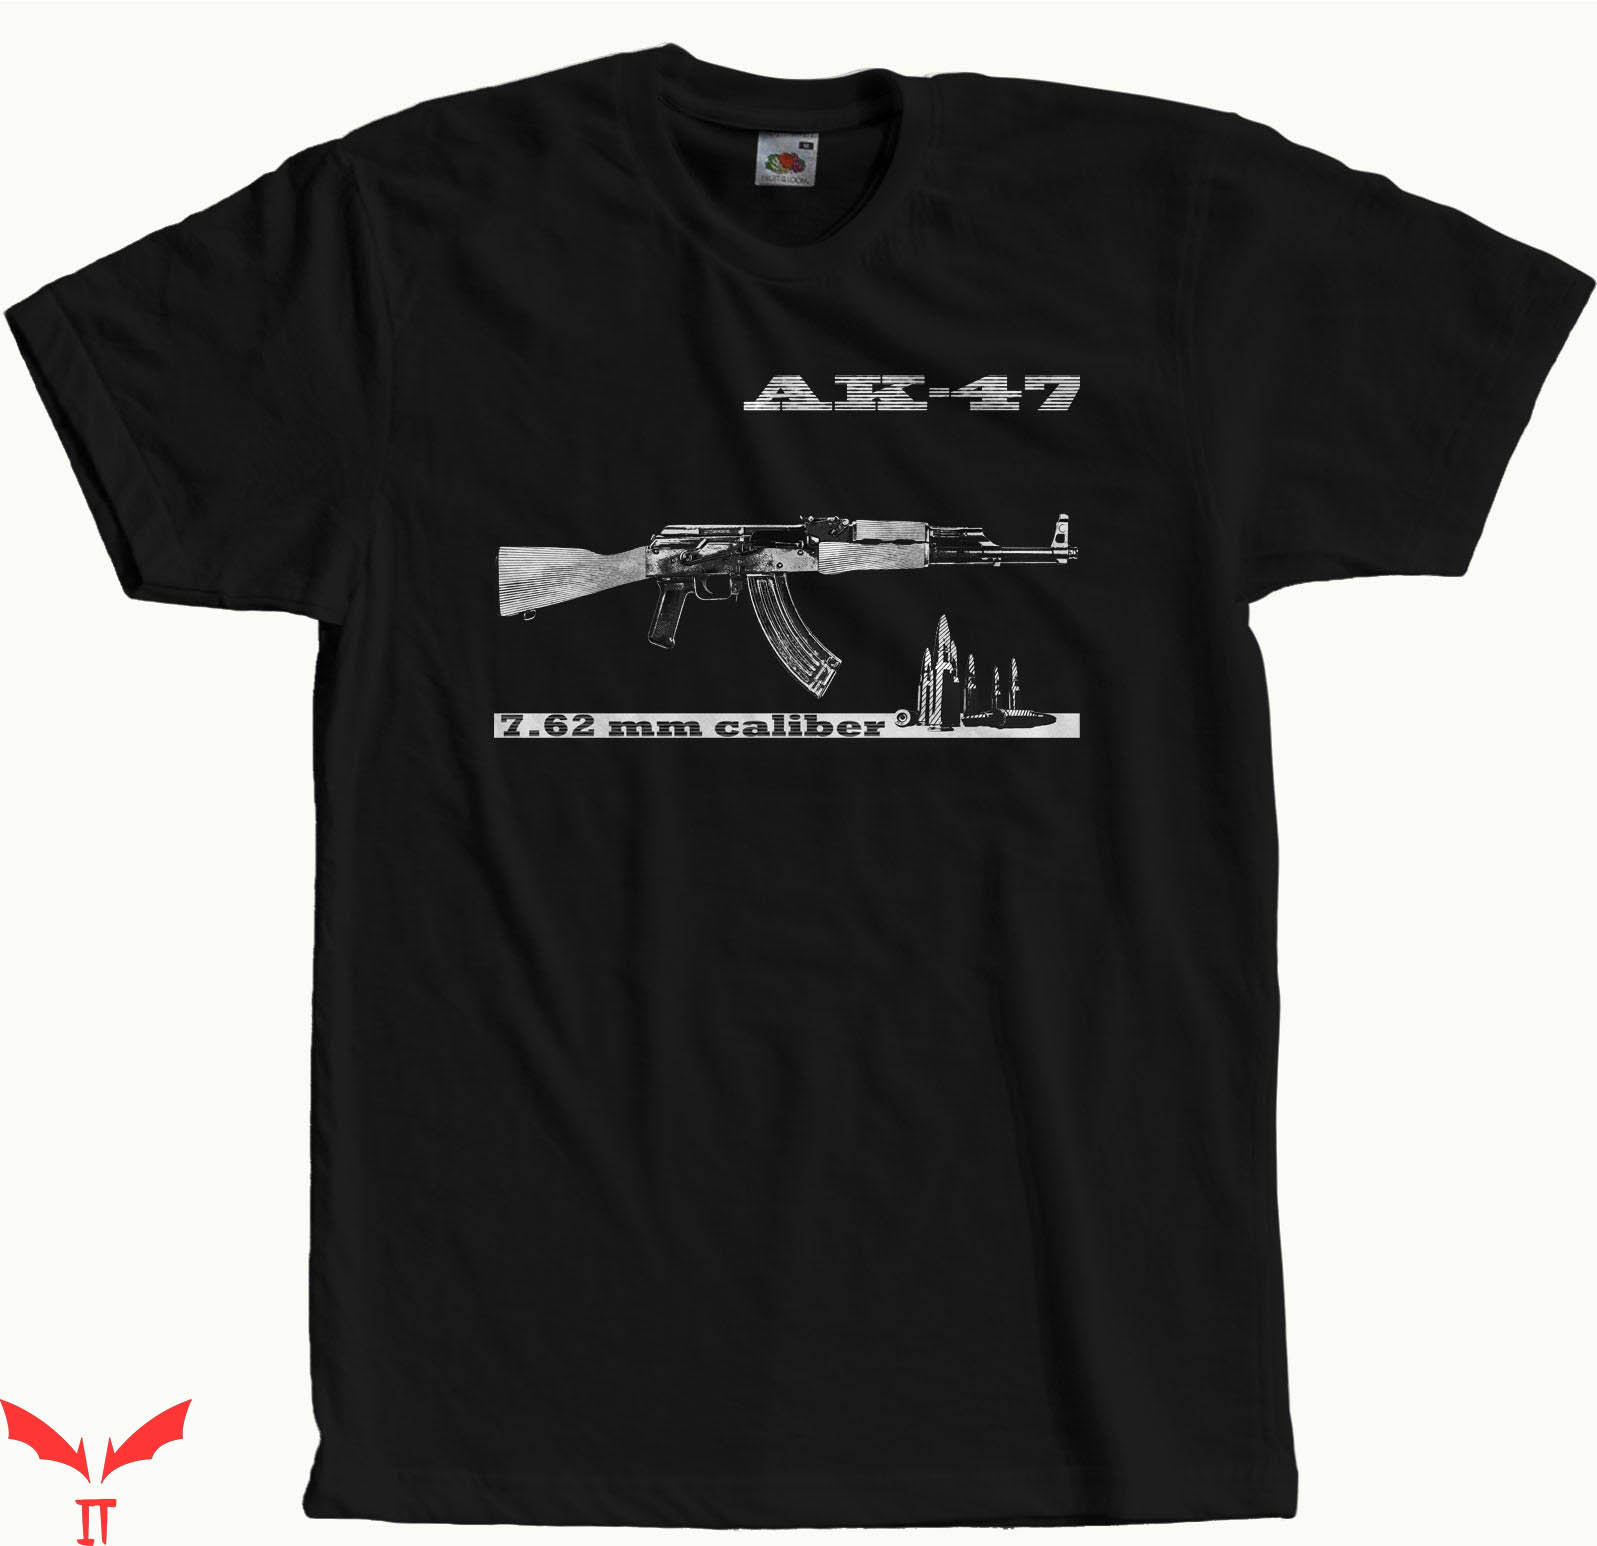 AK47 T-Shirt Kalashnikov 762mm Caliber T-shirt